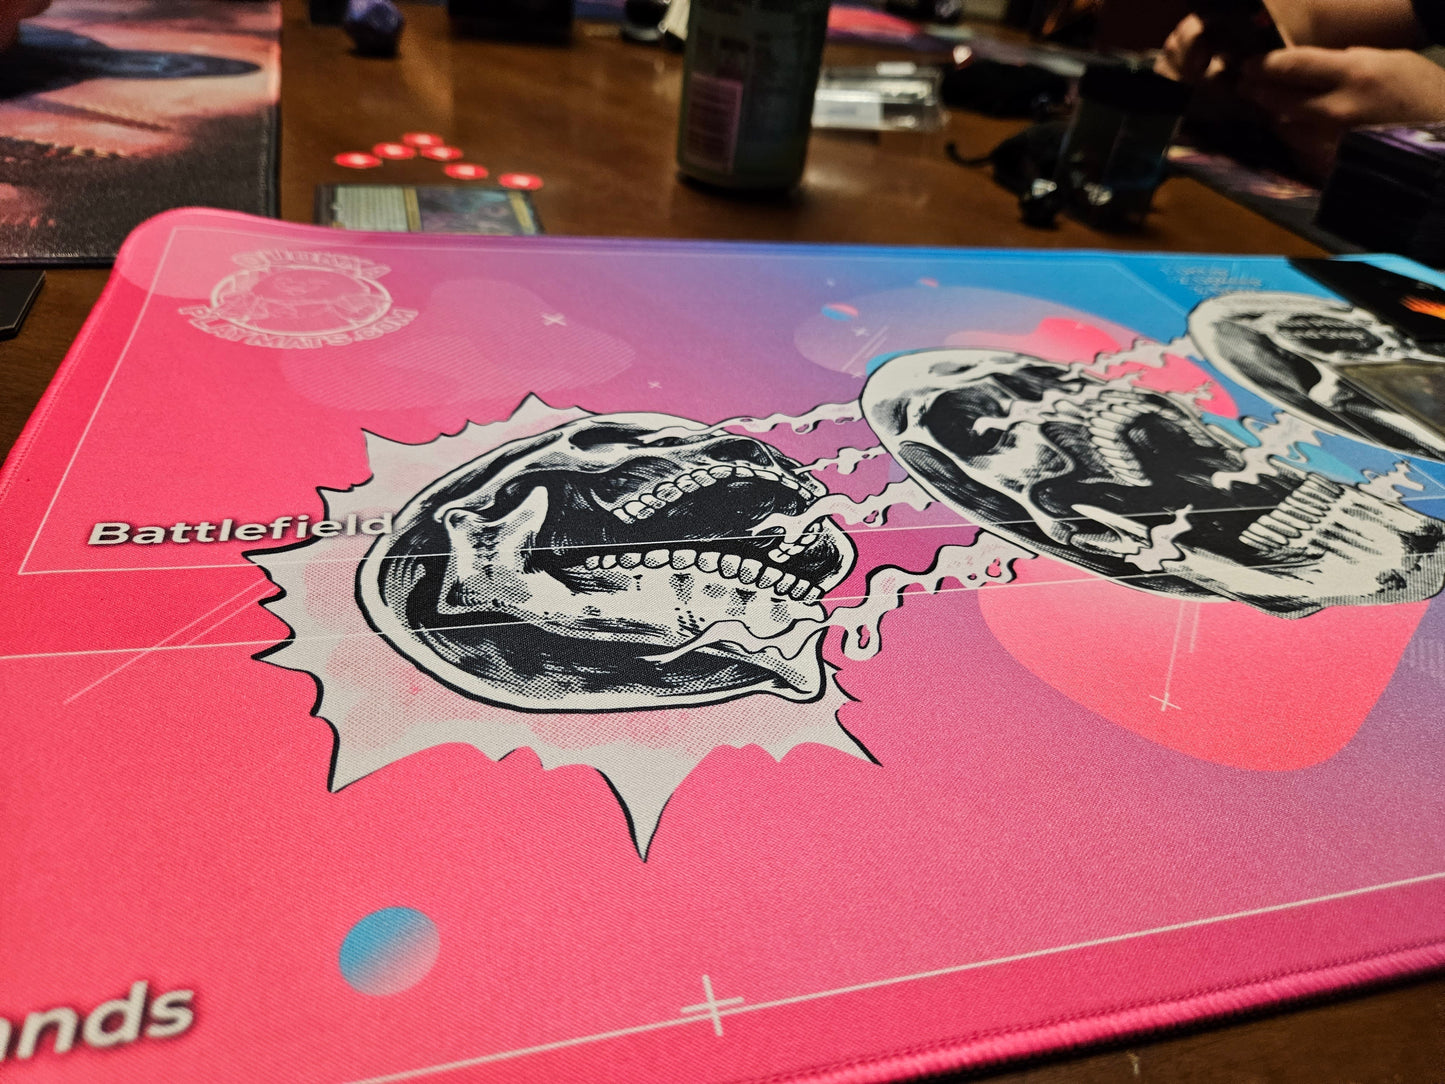 3 Skulls Design - One Piece Quokka TCG Playmat